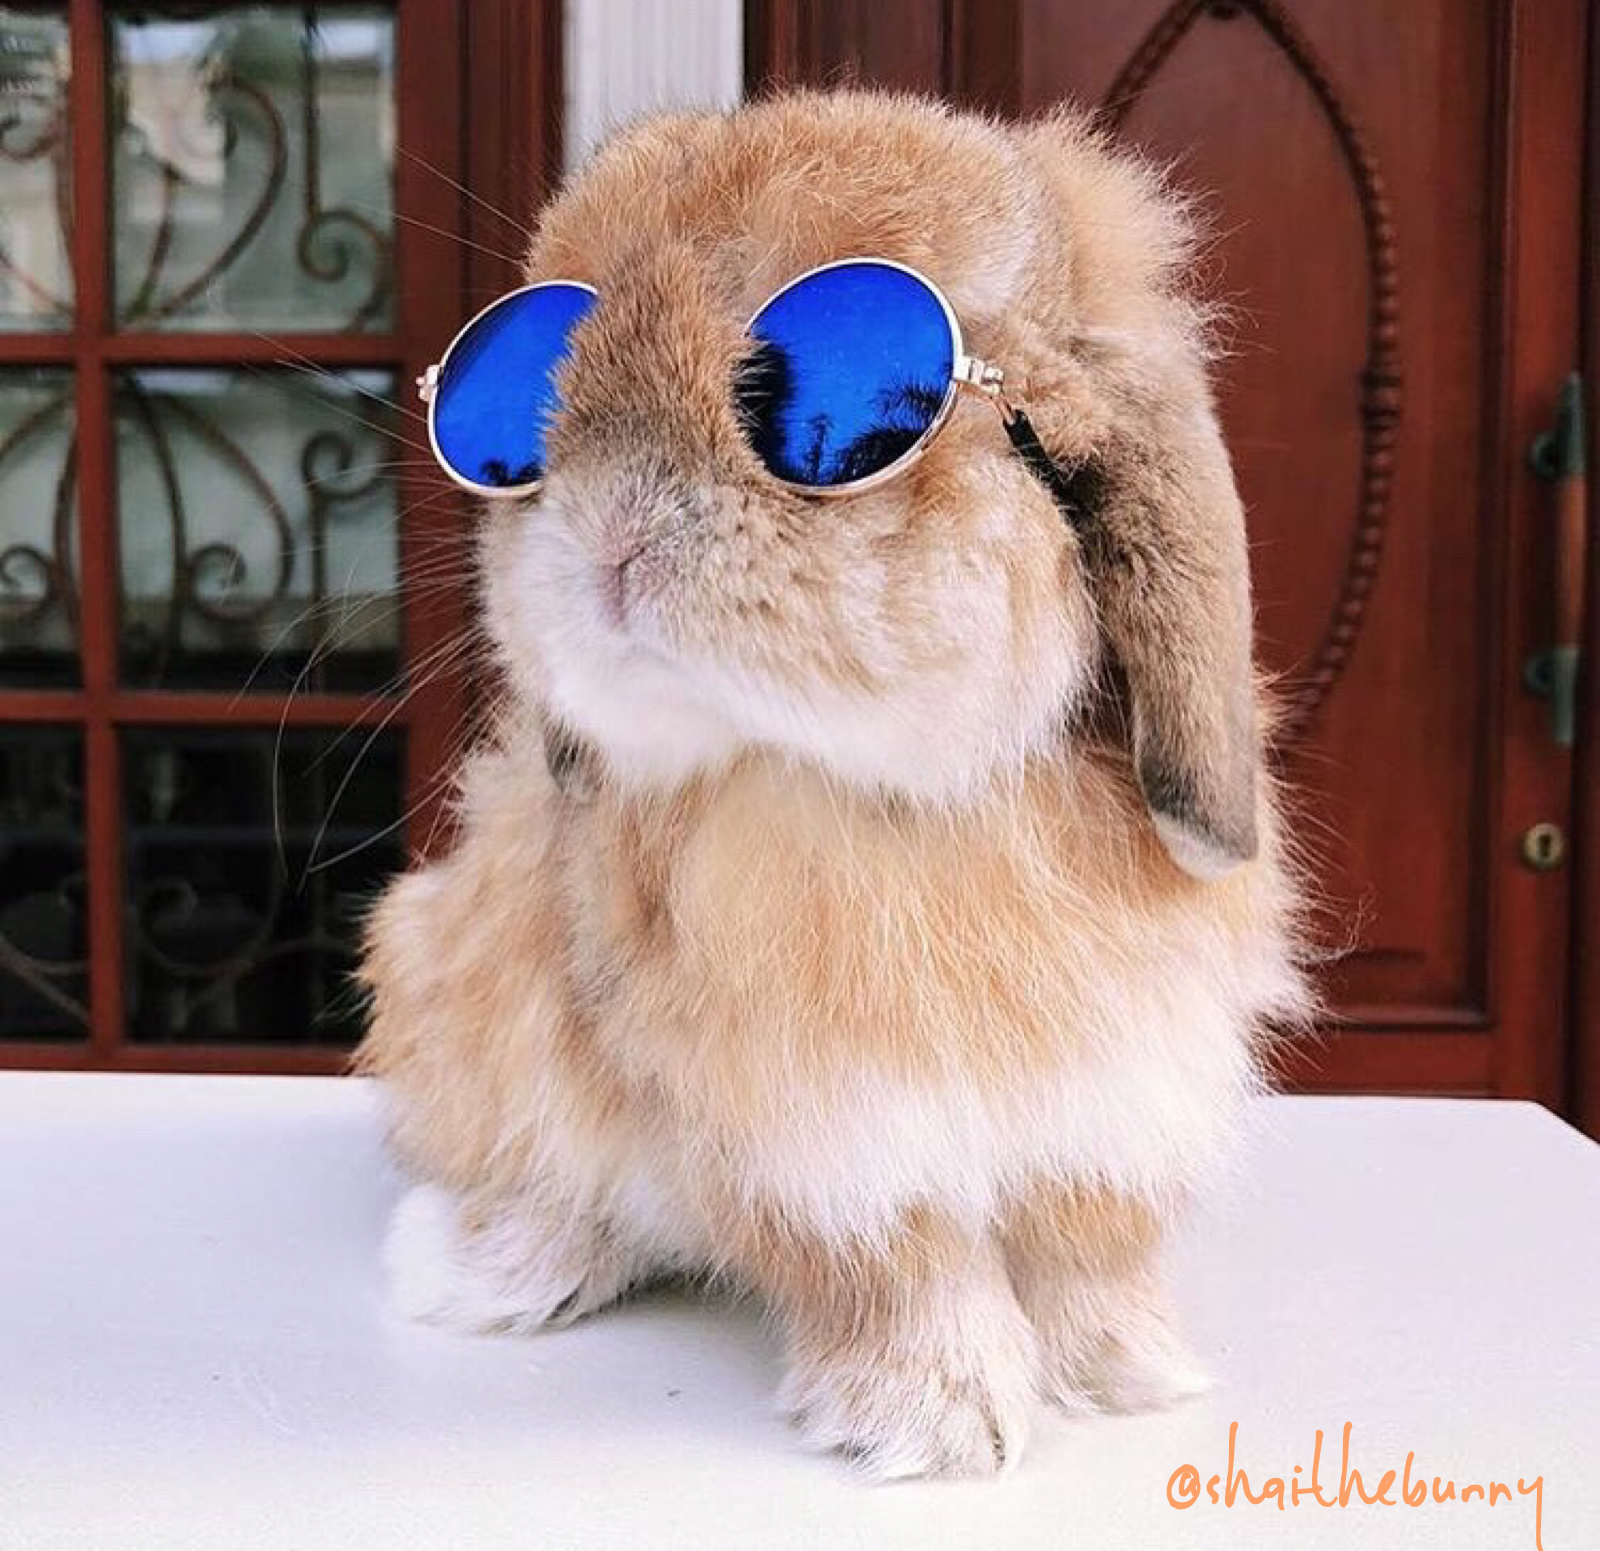 Mini-Pet Sunglasses for Rabbits & Bunnies -   bunnies bunnies bunnies